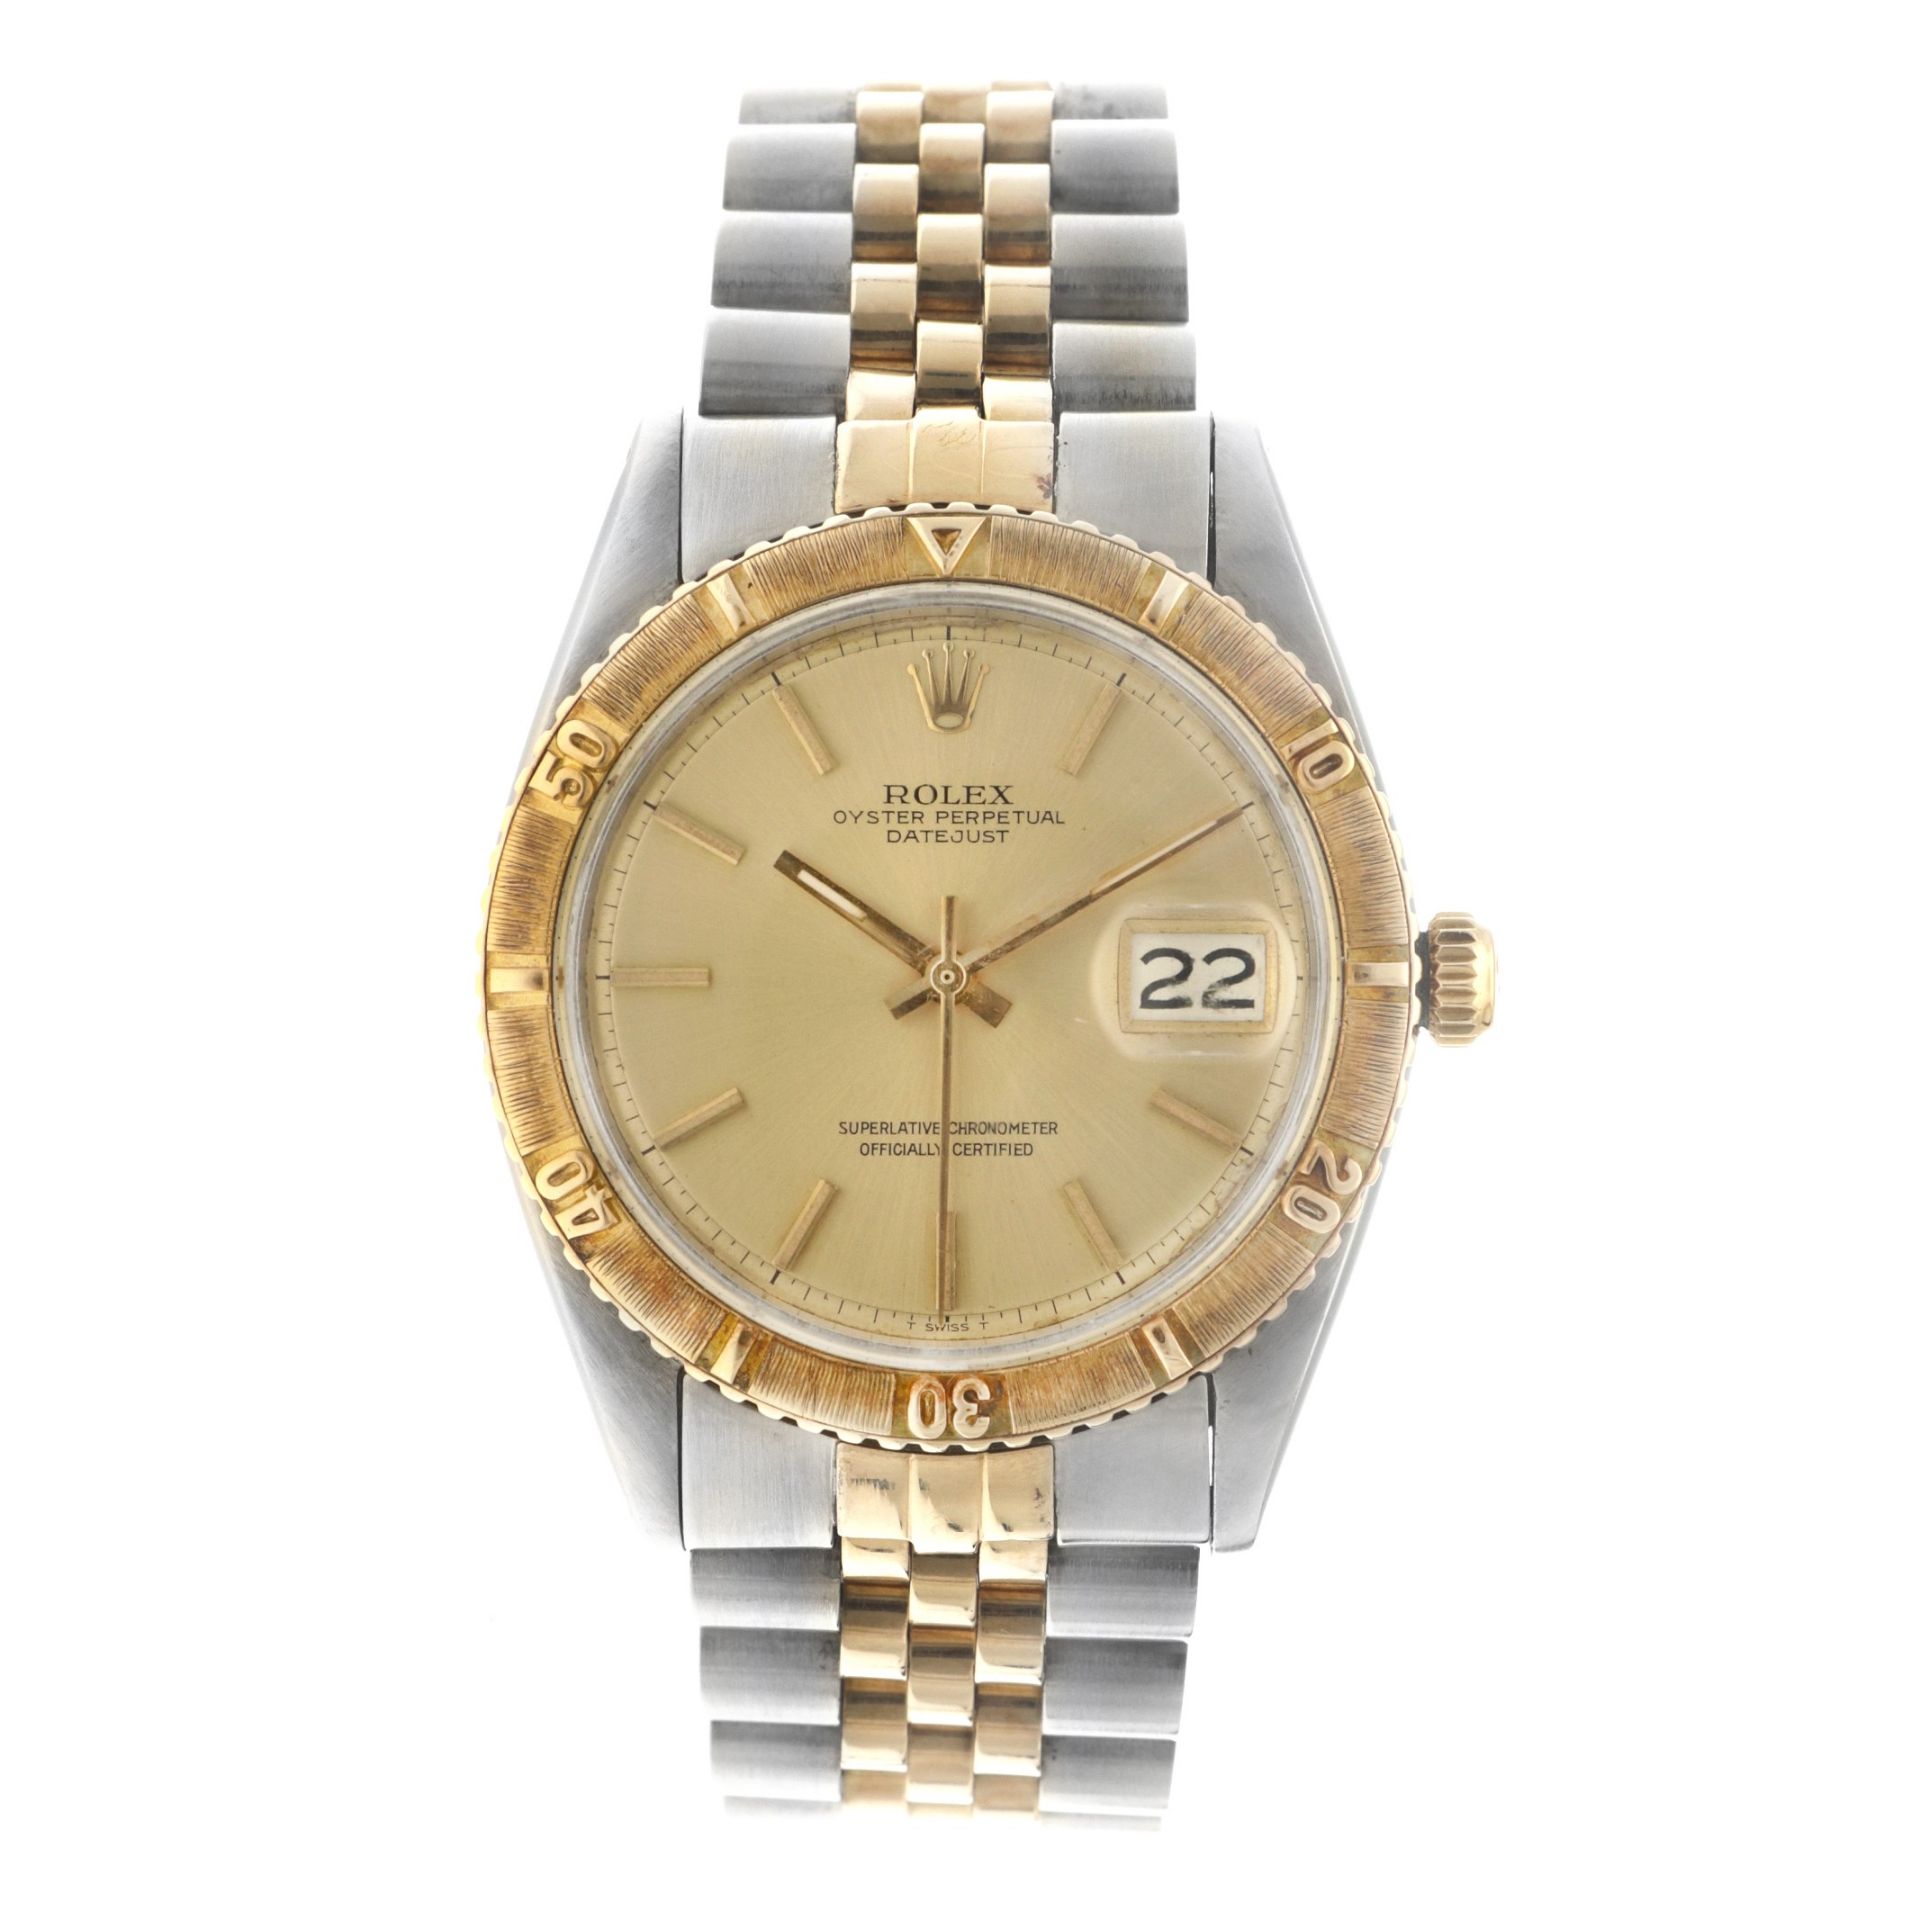 No Reserve - Rolex Datejust 36 Turn-O-Graph 1625 - Men's watch - ca. 1978.